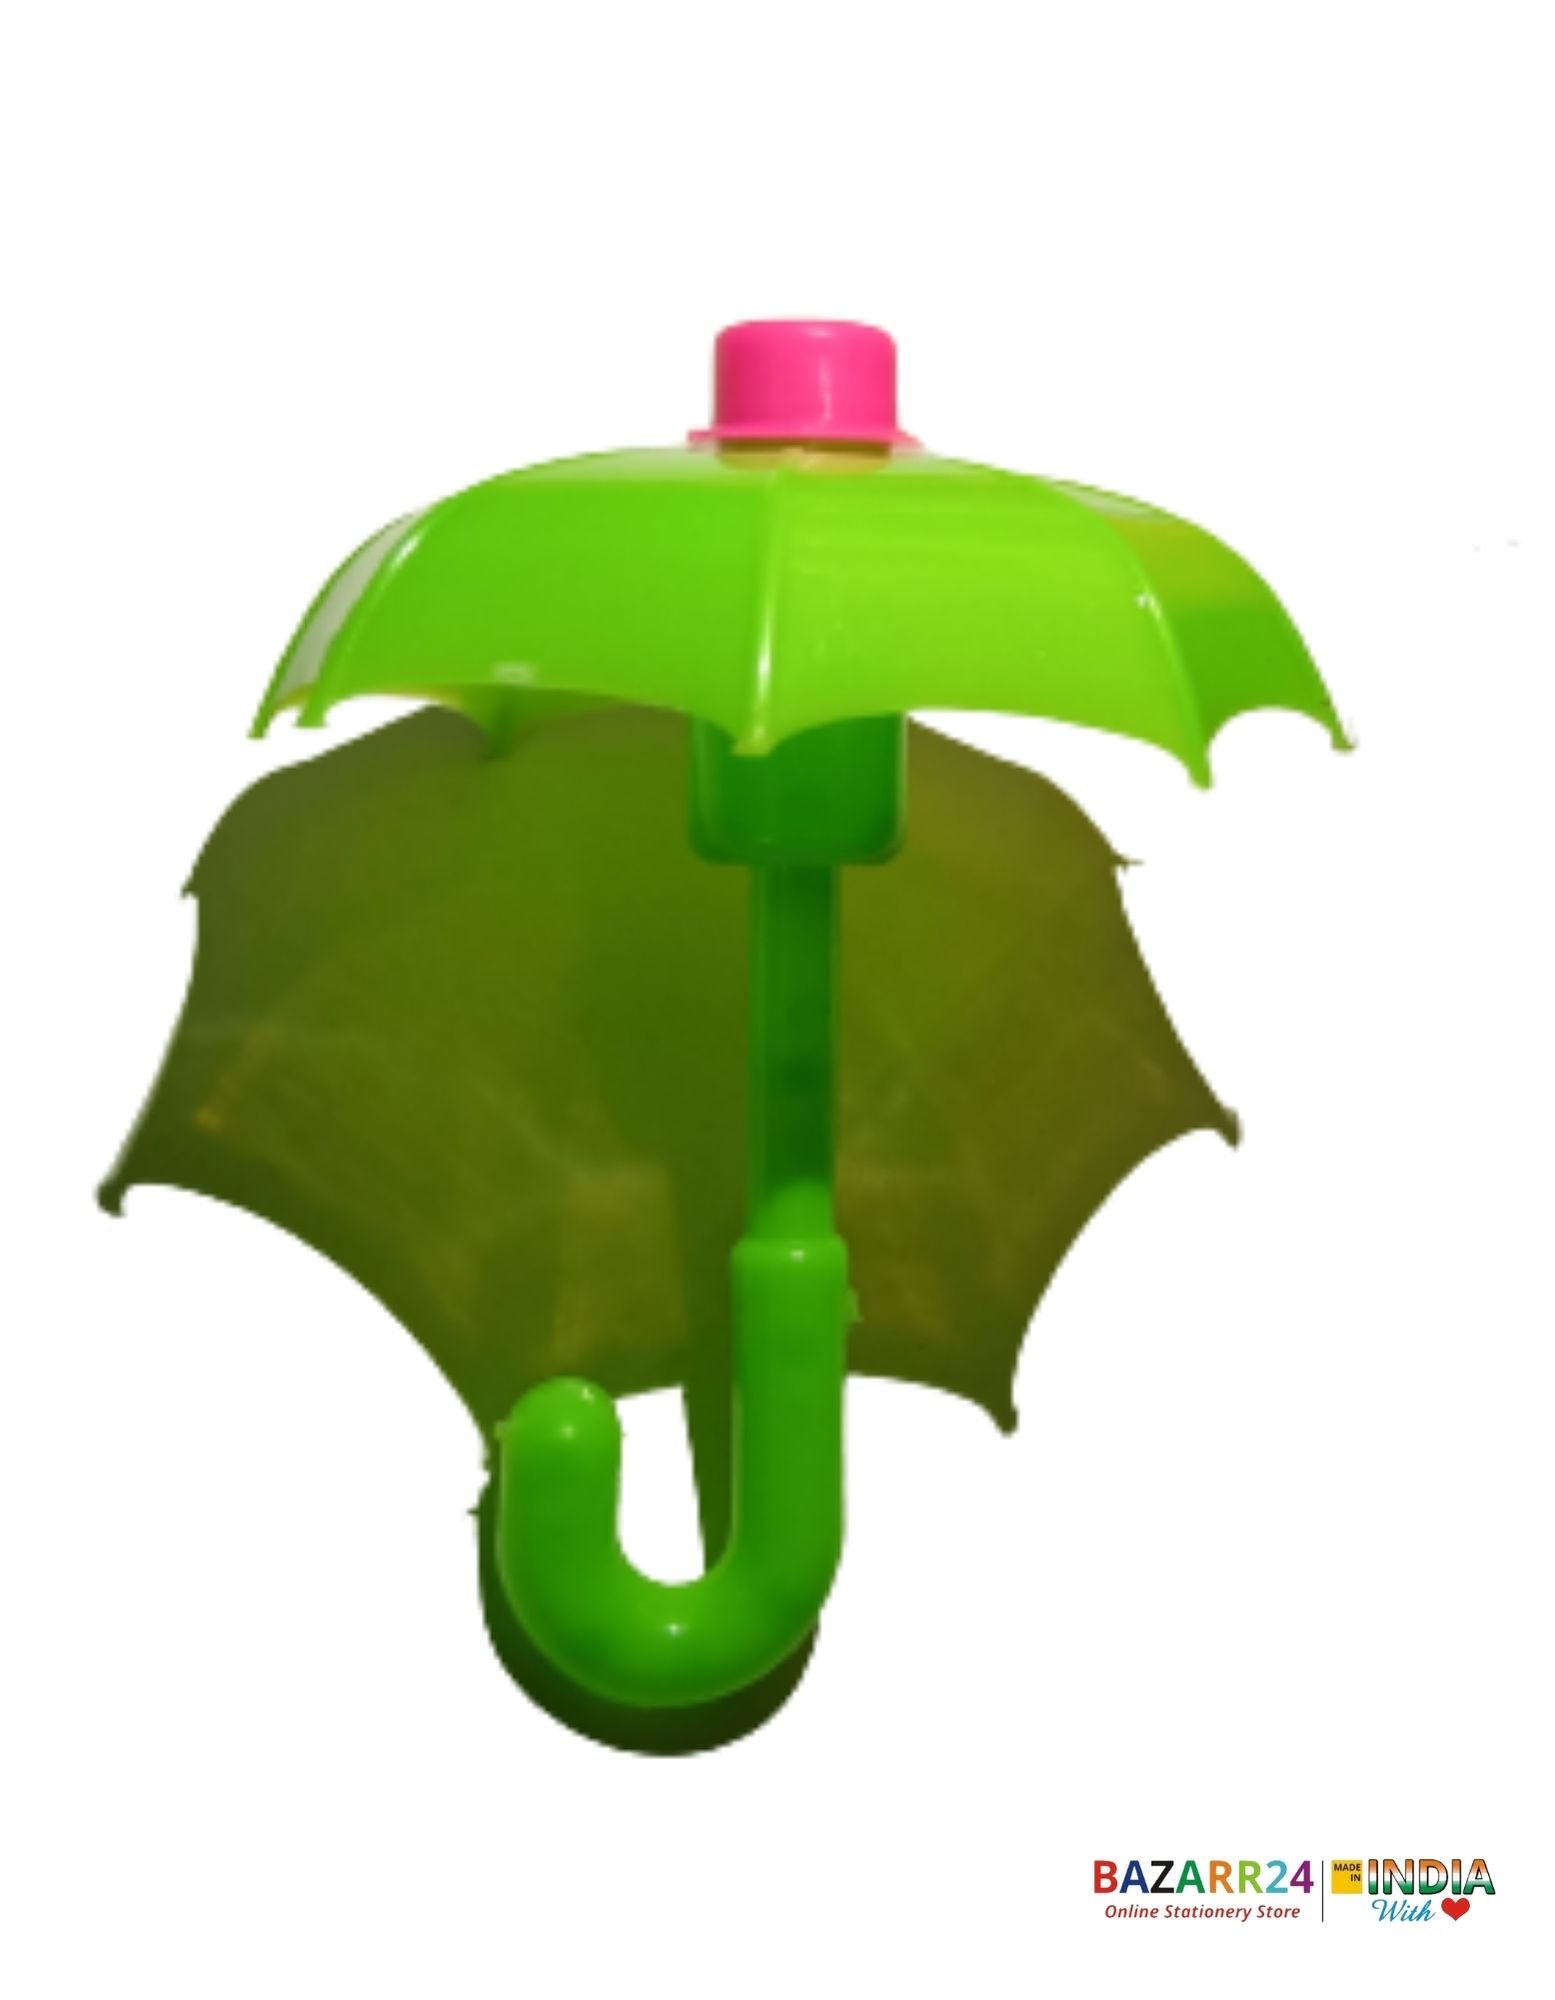 Plastic Umbrella Multicolor Toy for Kids (Set of 5)